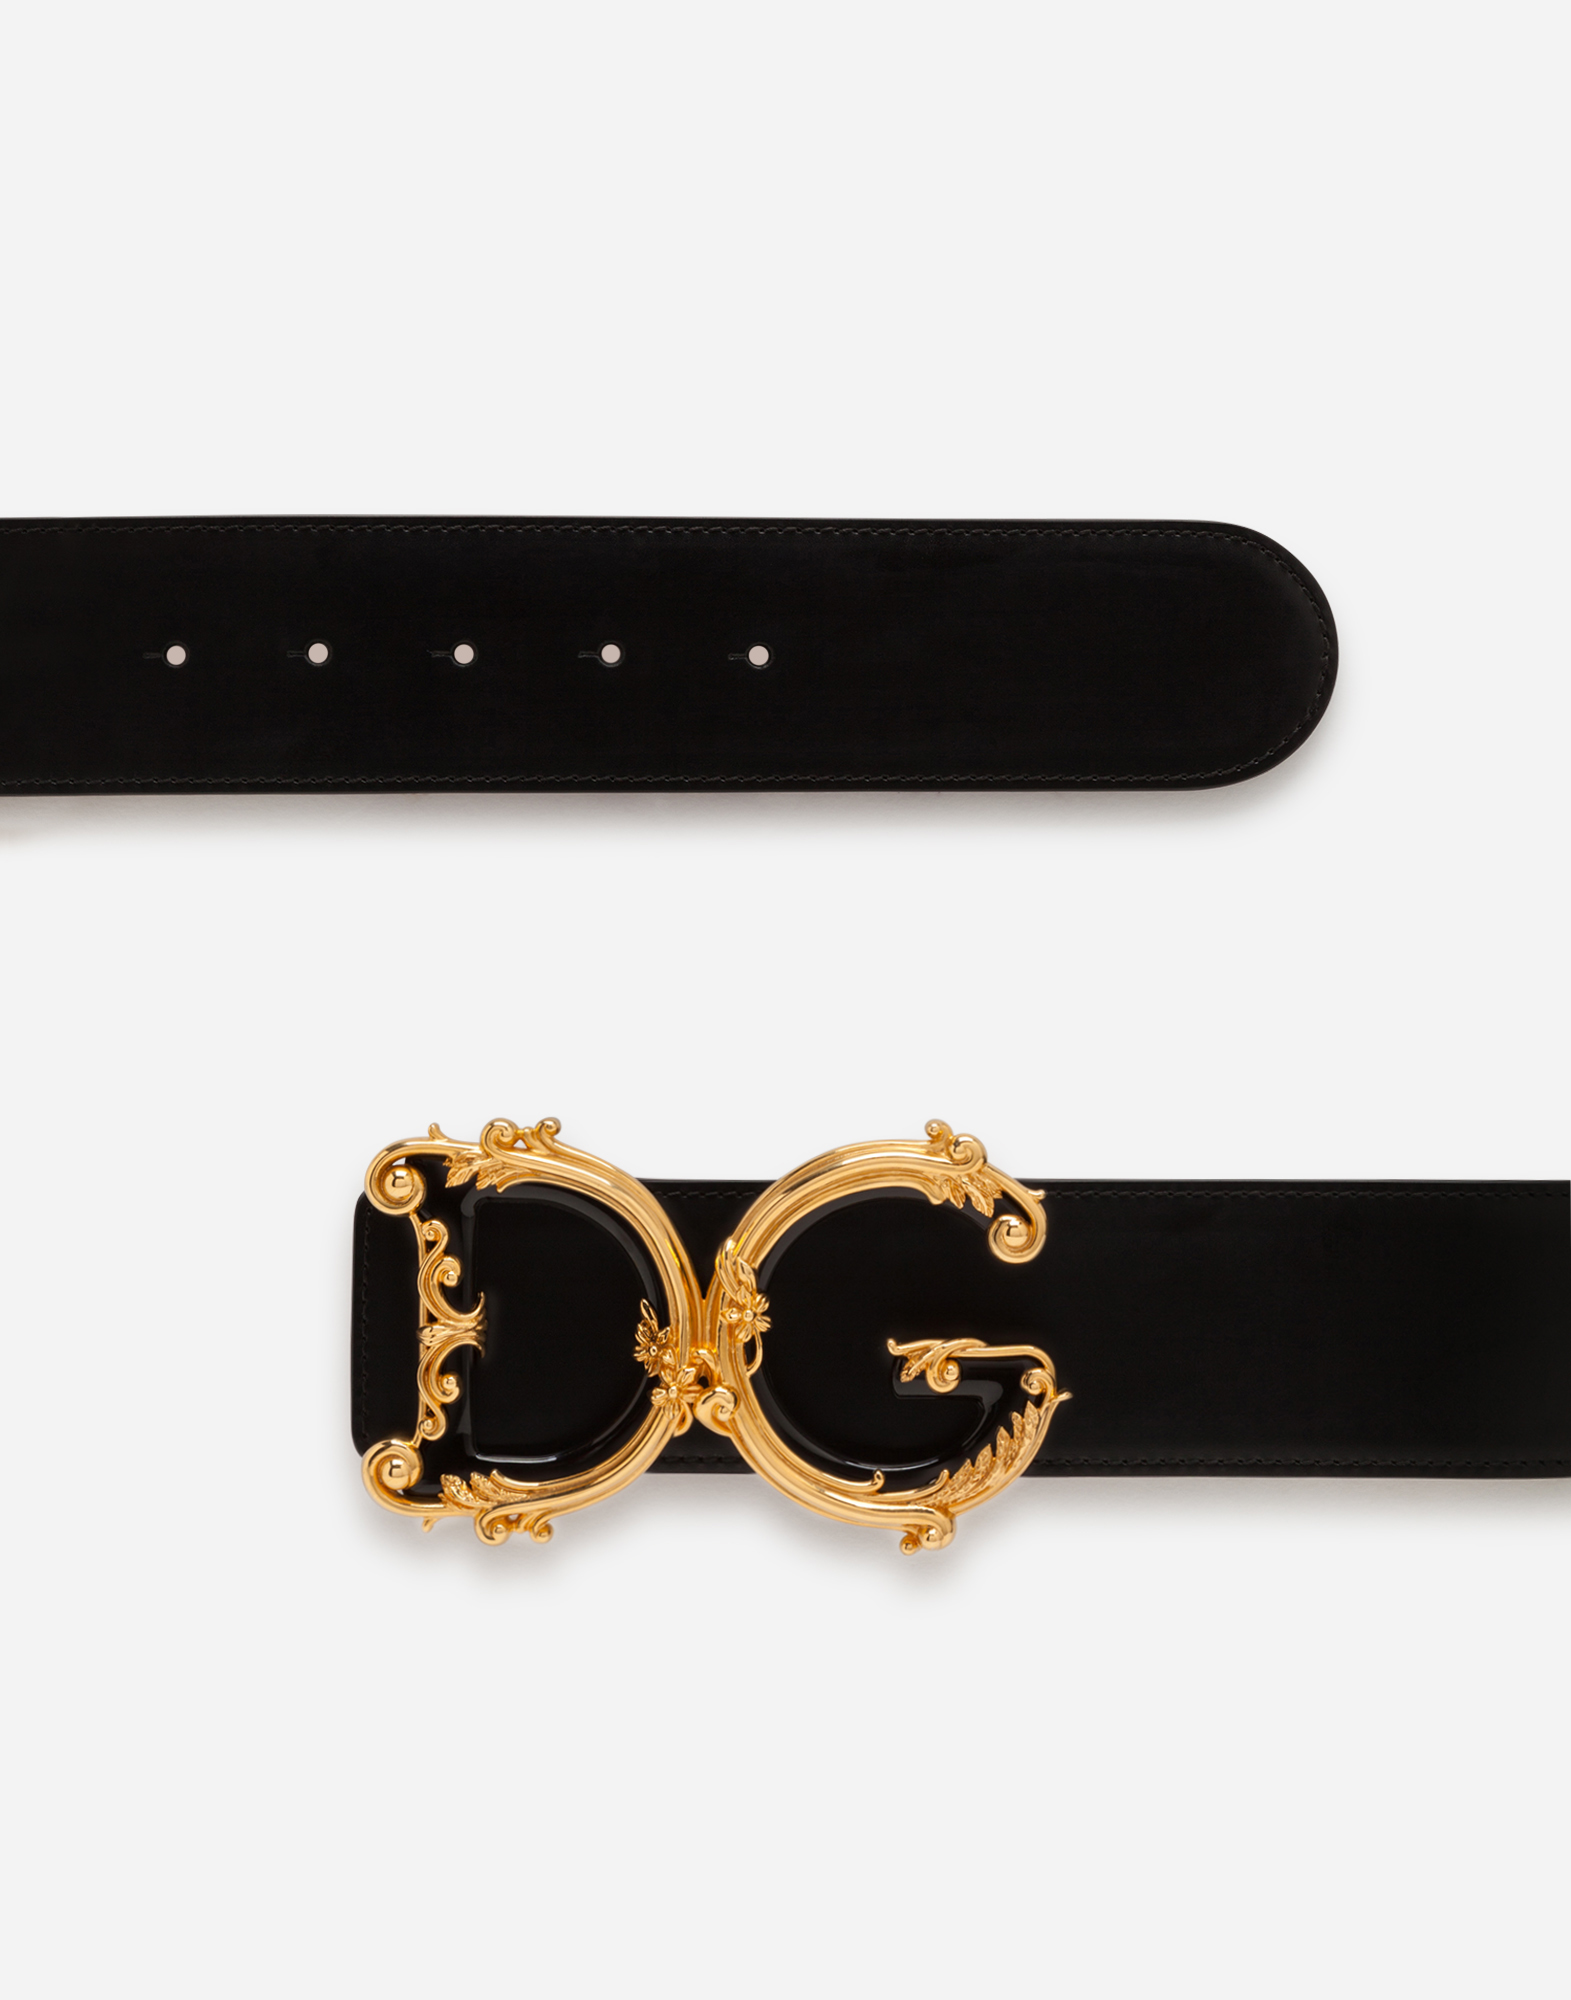 Leather belt with D\u0026G baroque logo